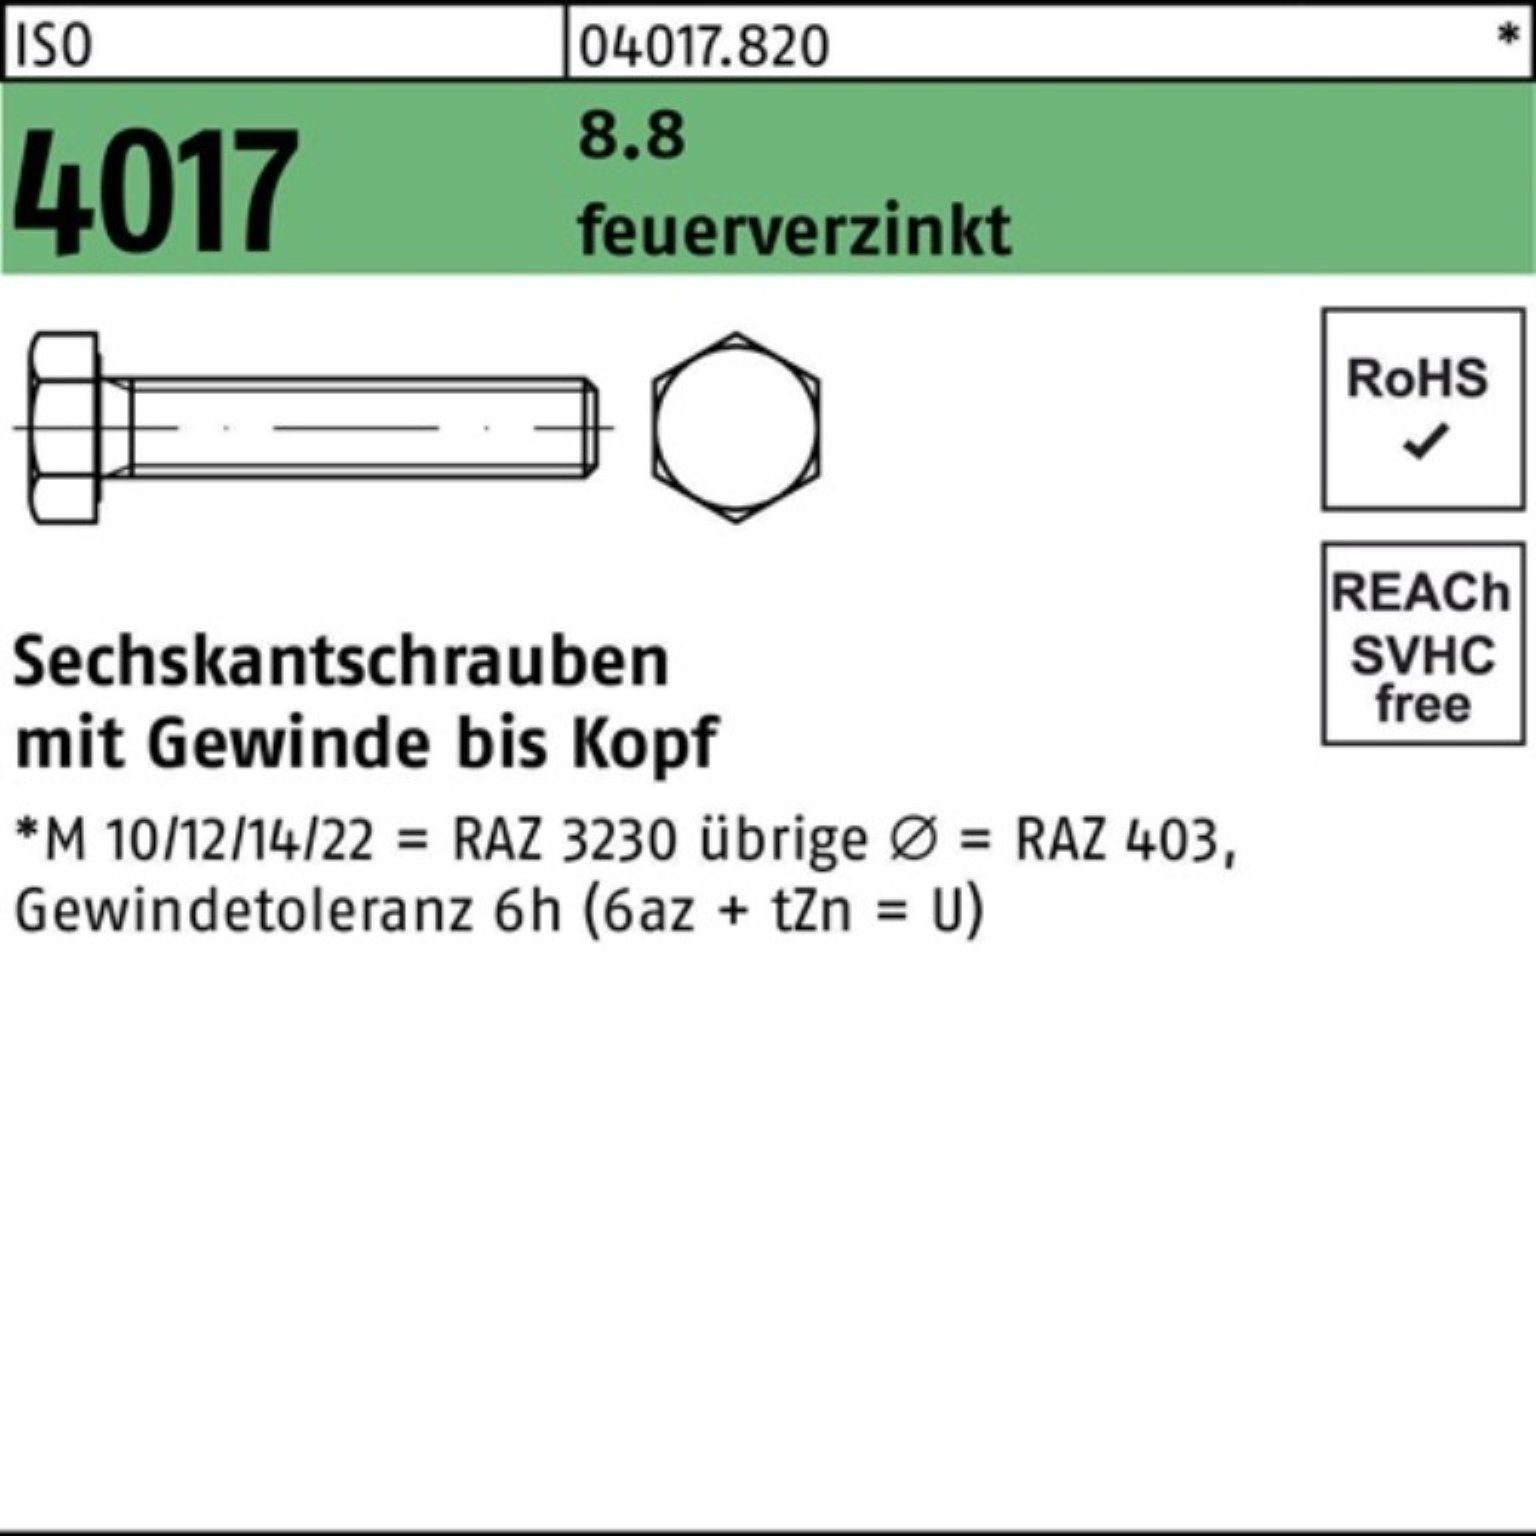 Bufab Sechskantschraube 100er Pack Sechskantschraube ISO 4017 VG M16x 25 8.8 feuerverz. 50 St | Schrauben